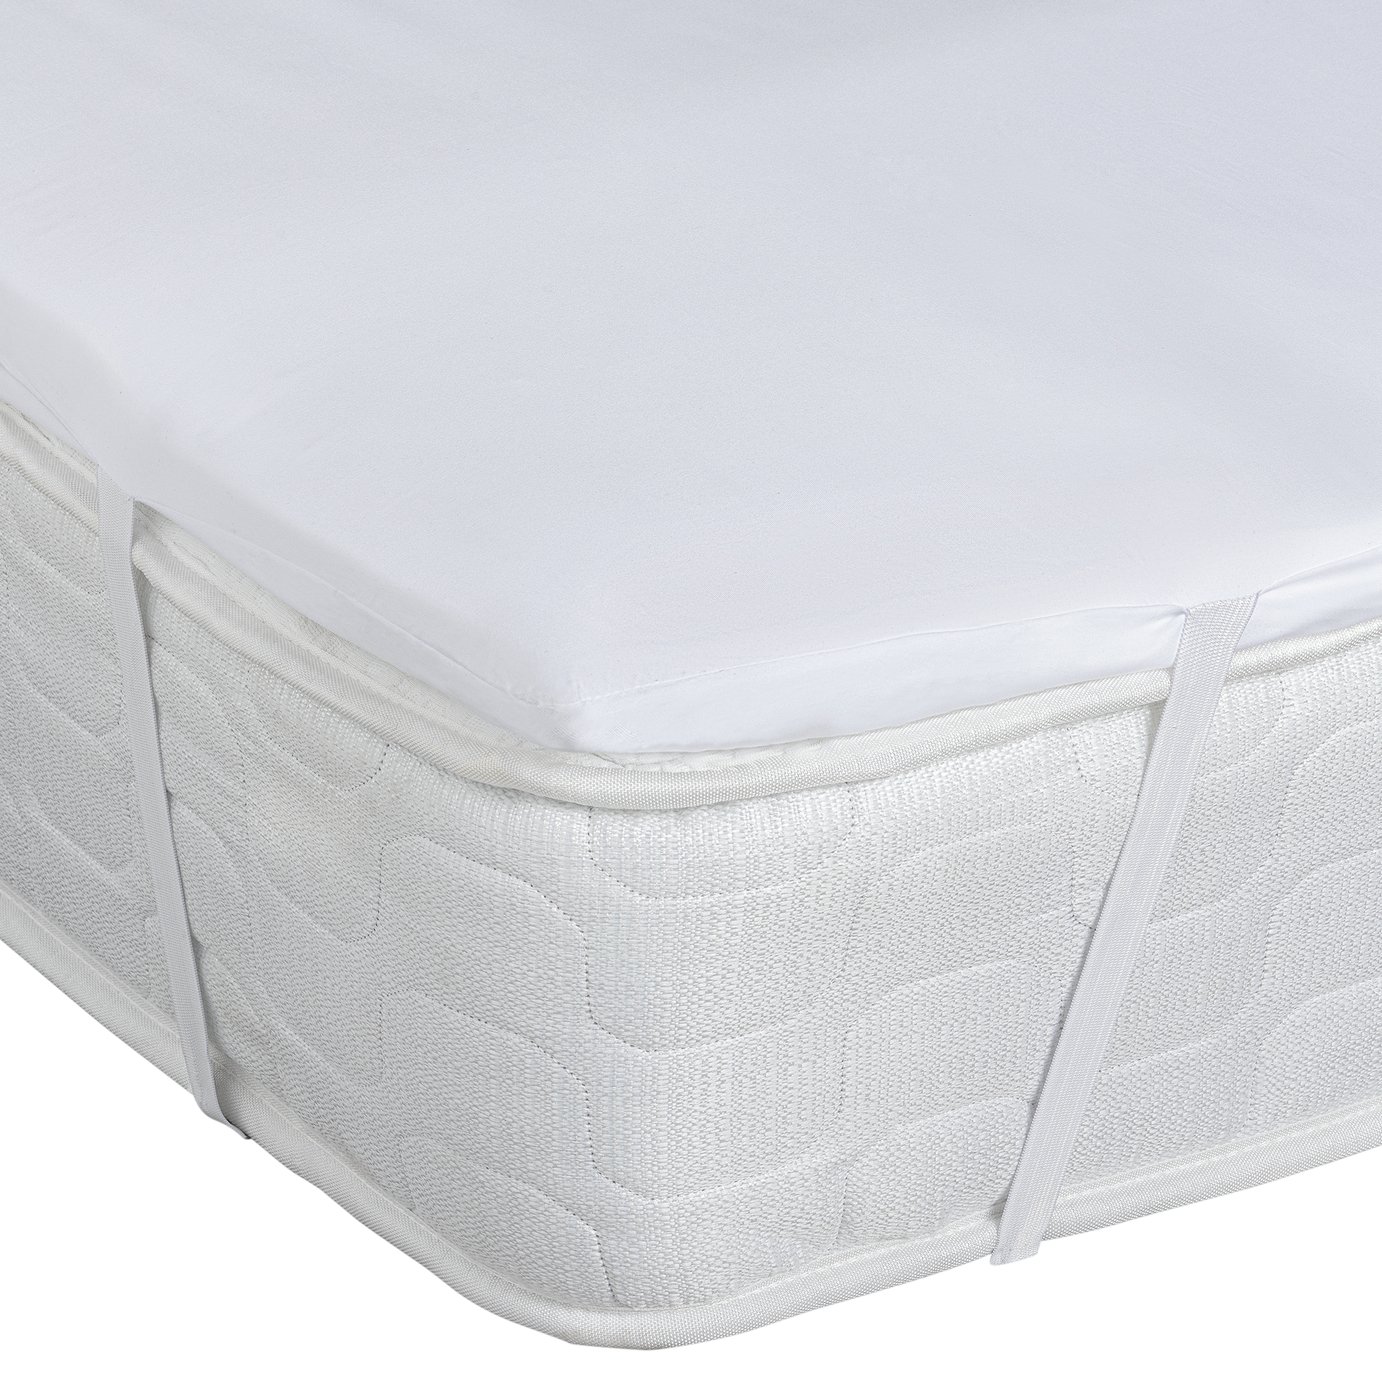 5cm memory foam mattress